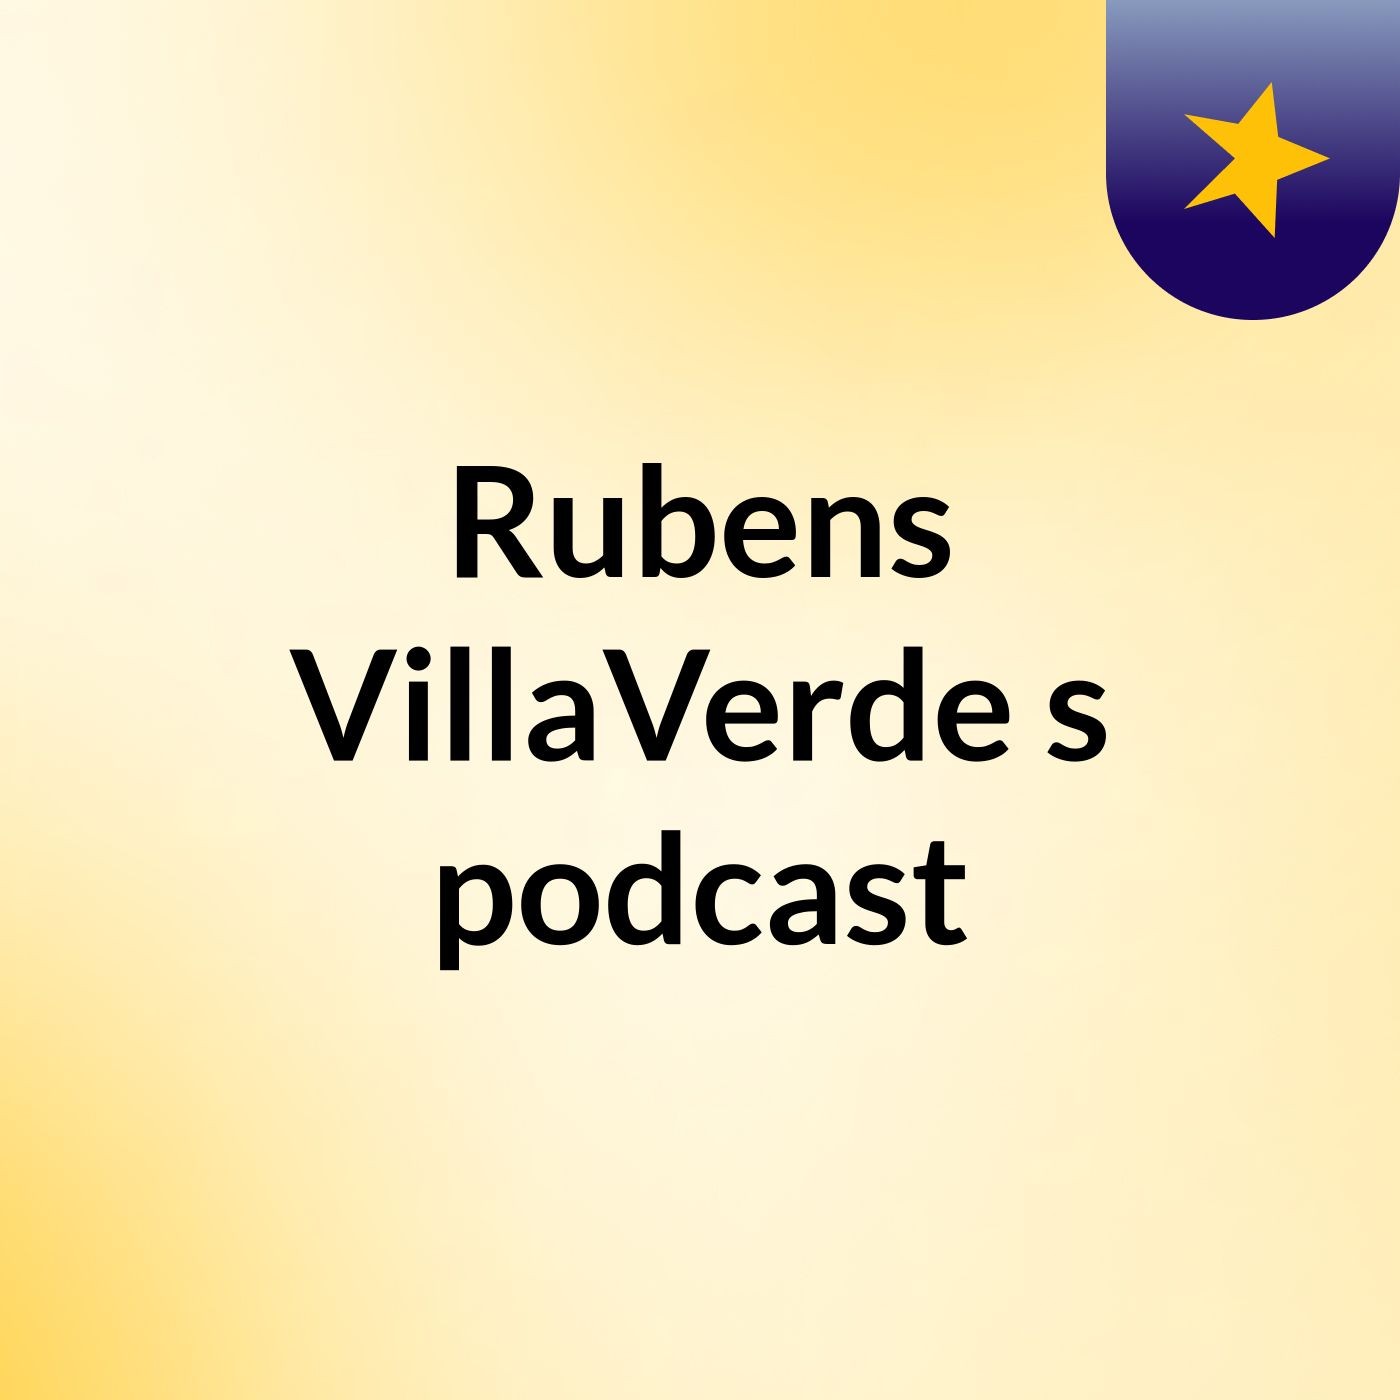 Rubens VillaVerde's podcast